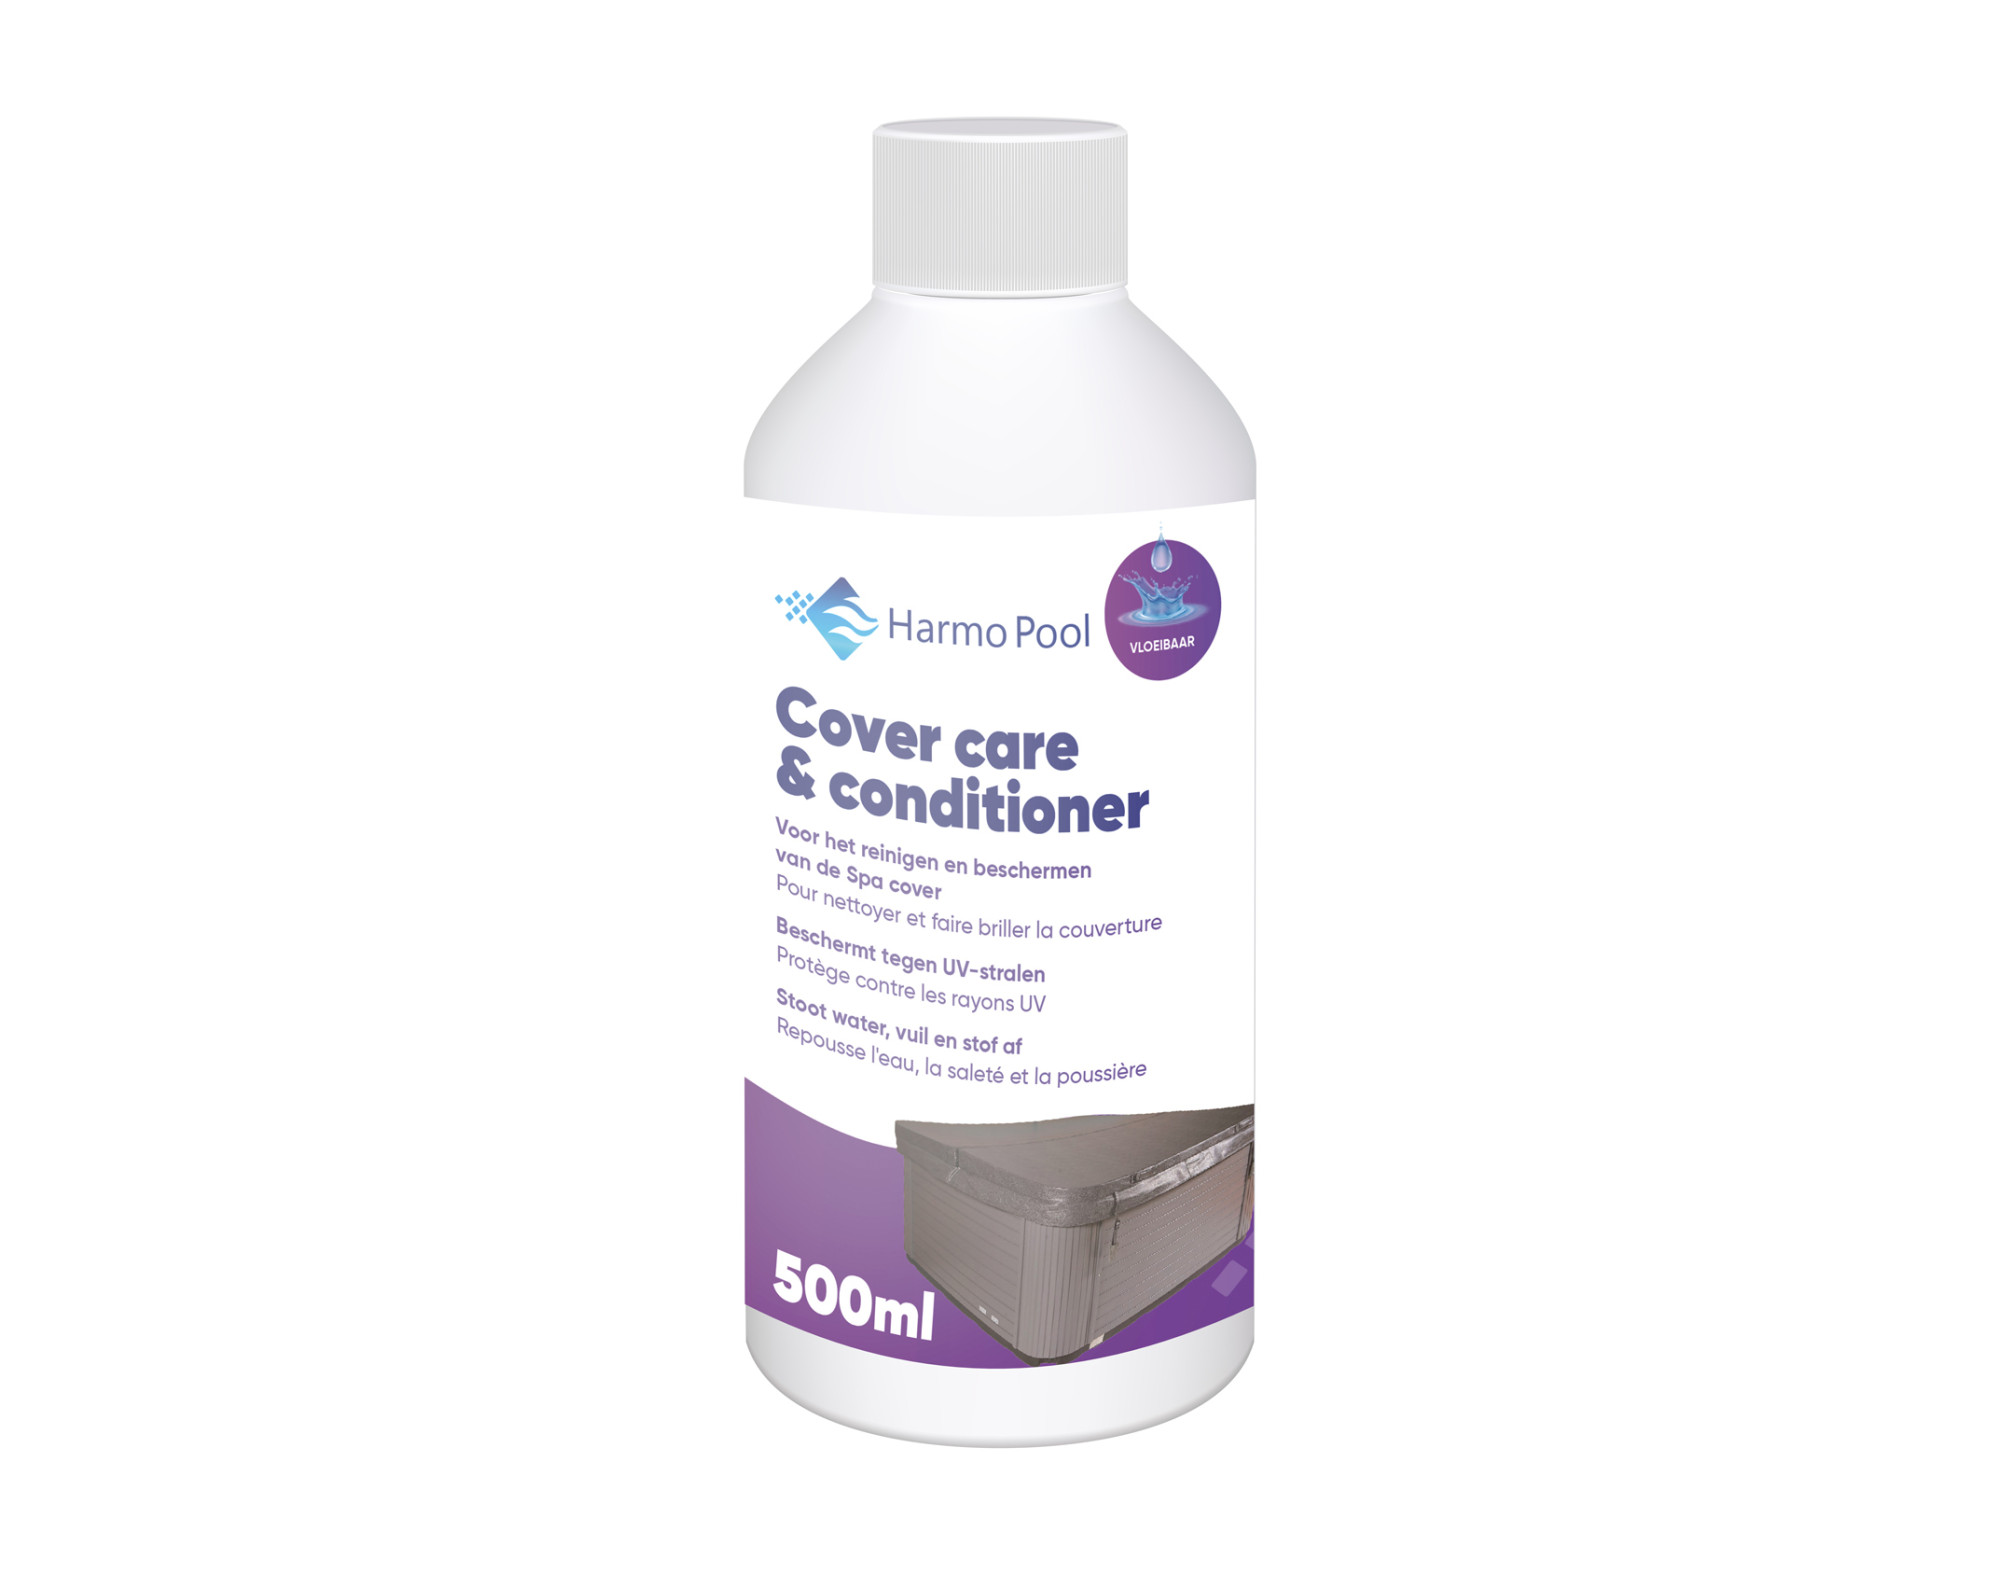 Cover Care & Conditioner - Cover-reiniger